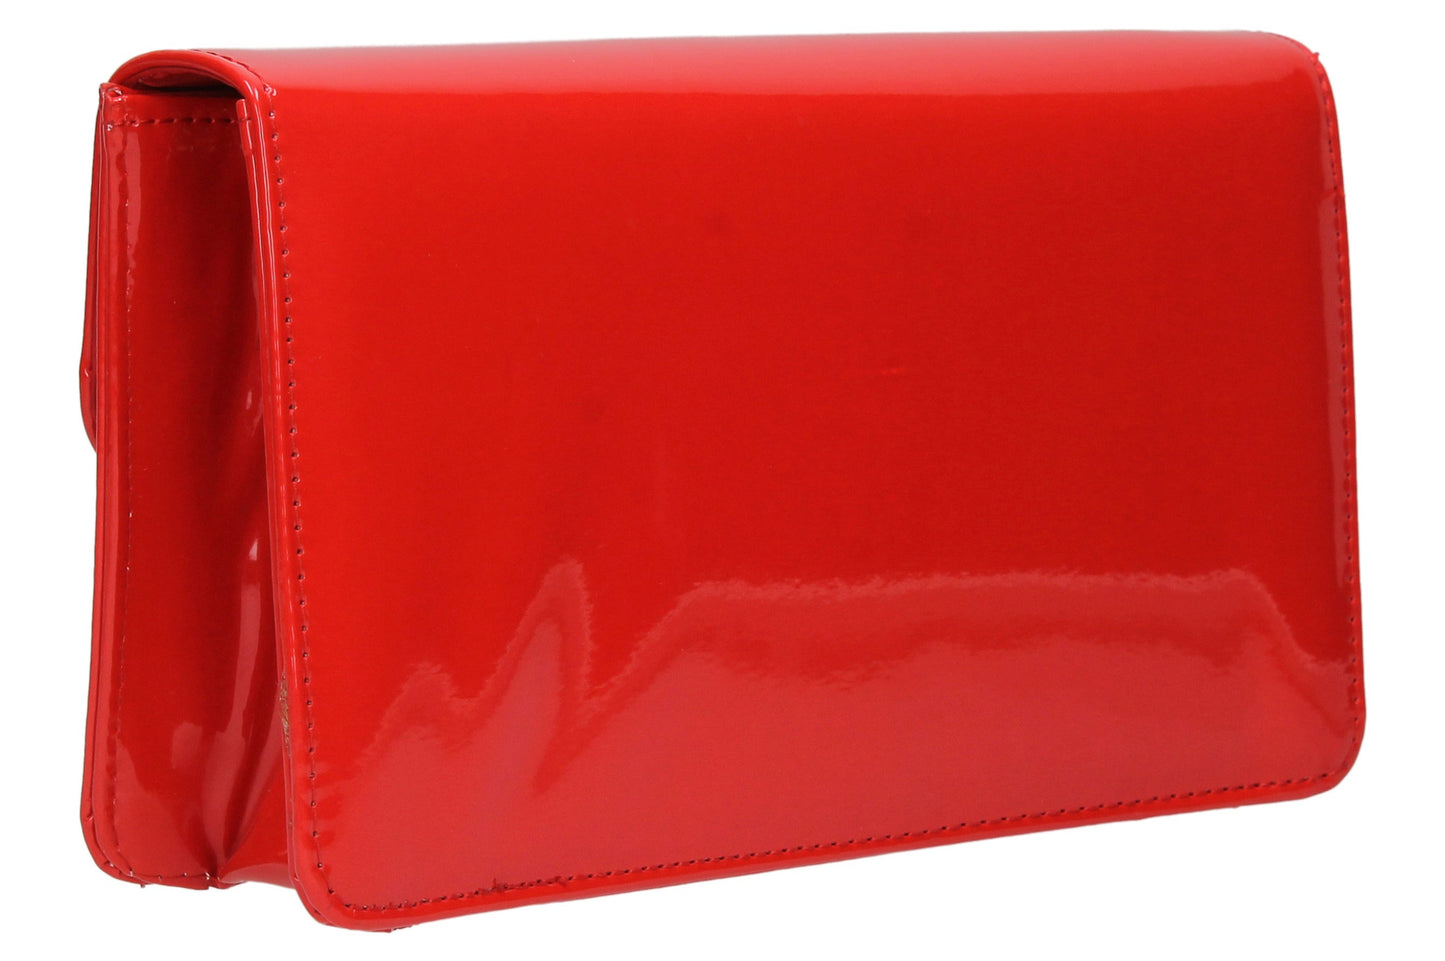 SWANKYSWANS Paris Clutch Bag Red Cute Cheap Clutch Bag For Weddings School and Work